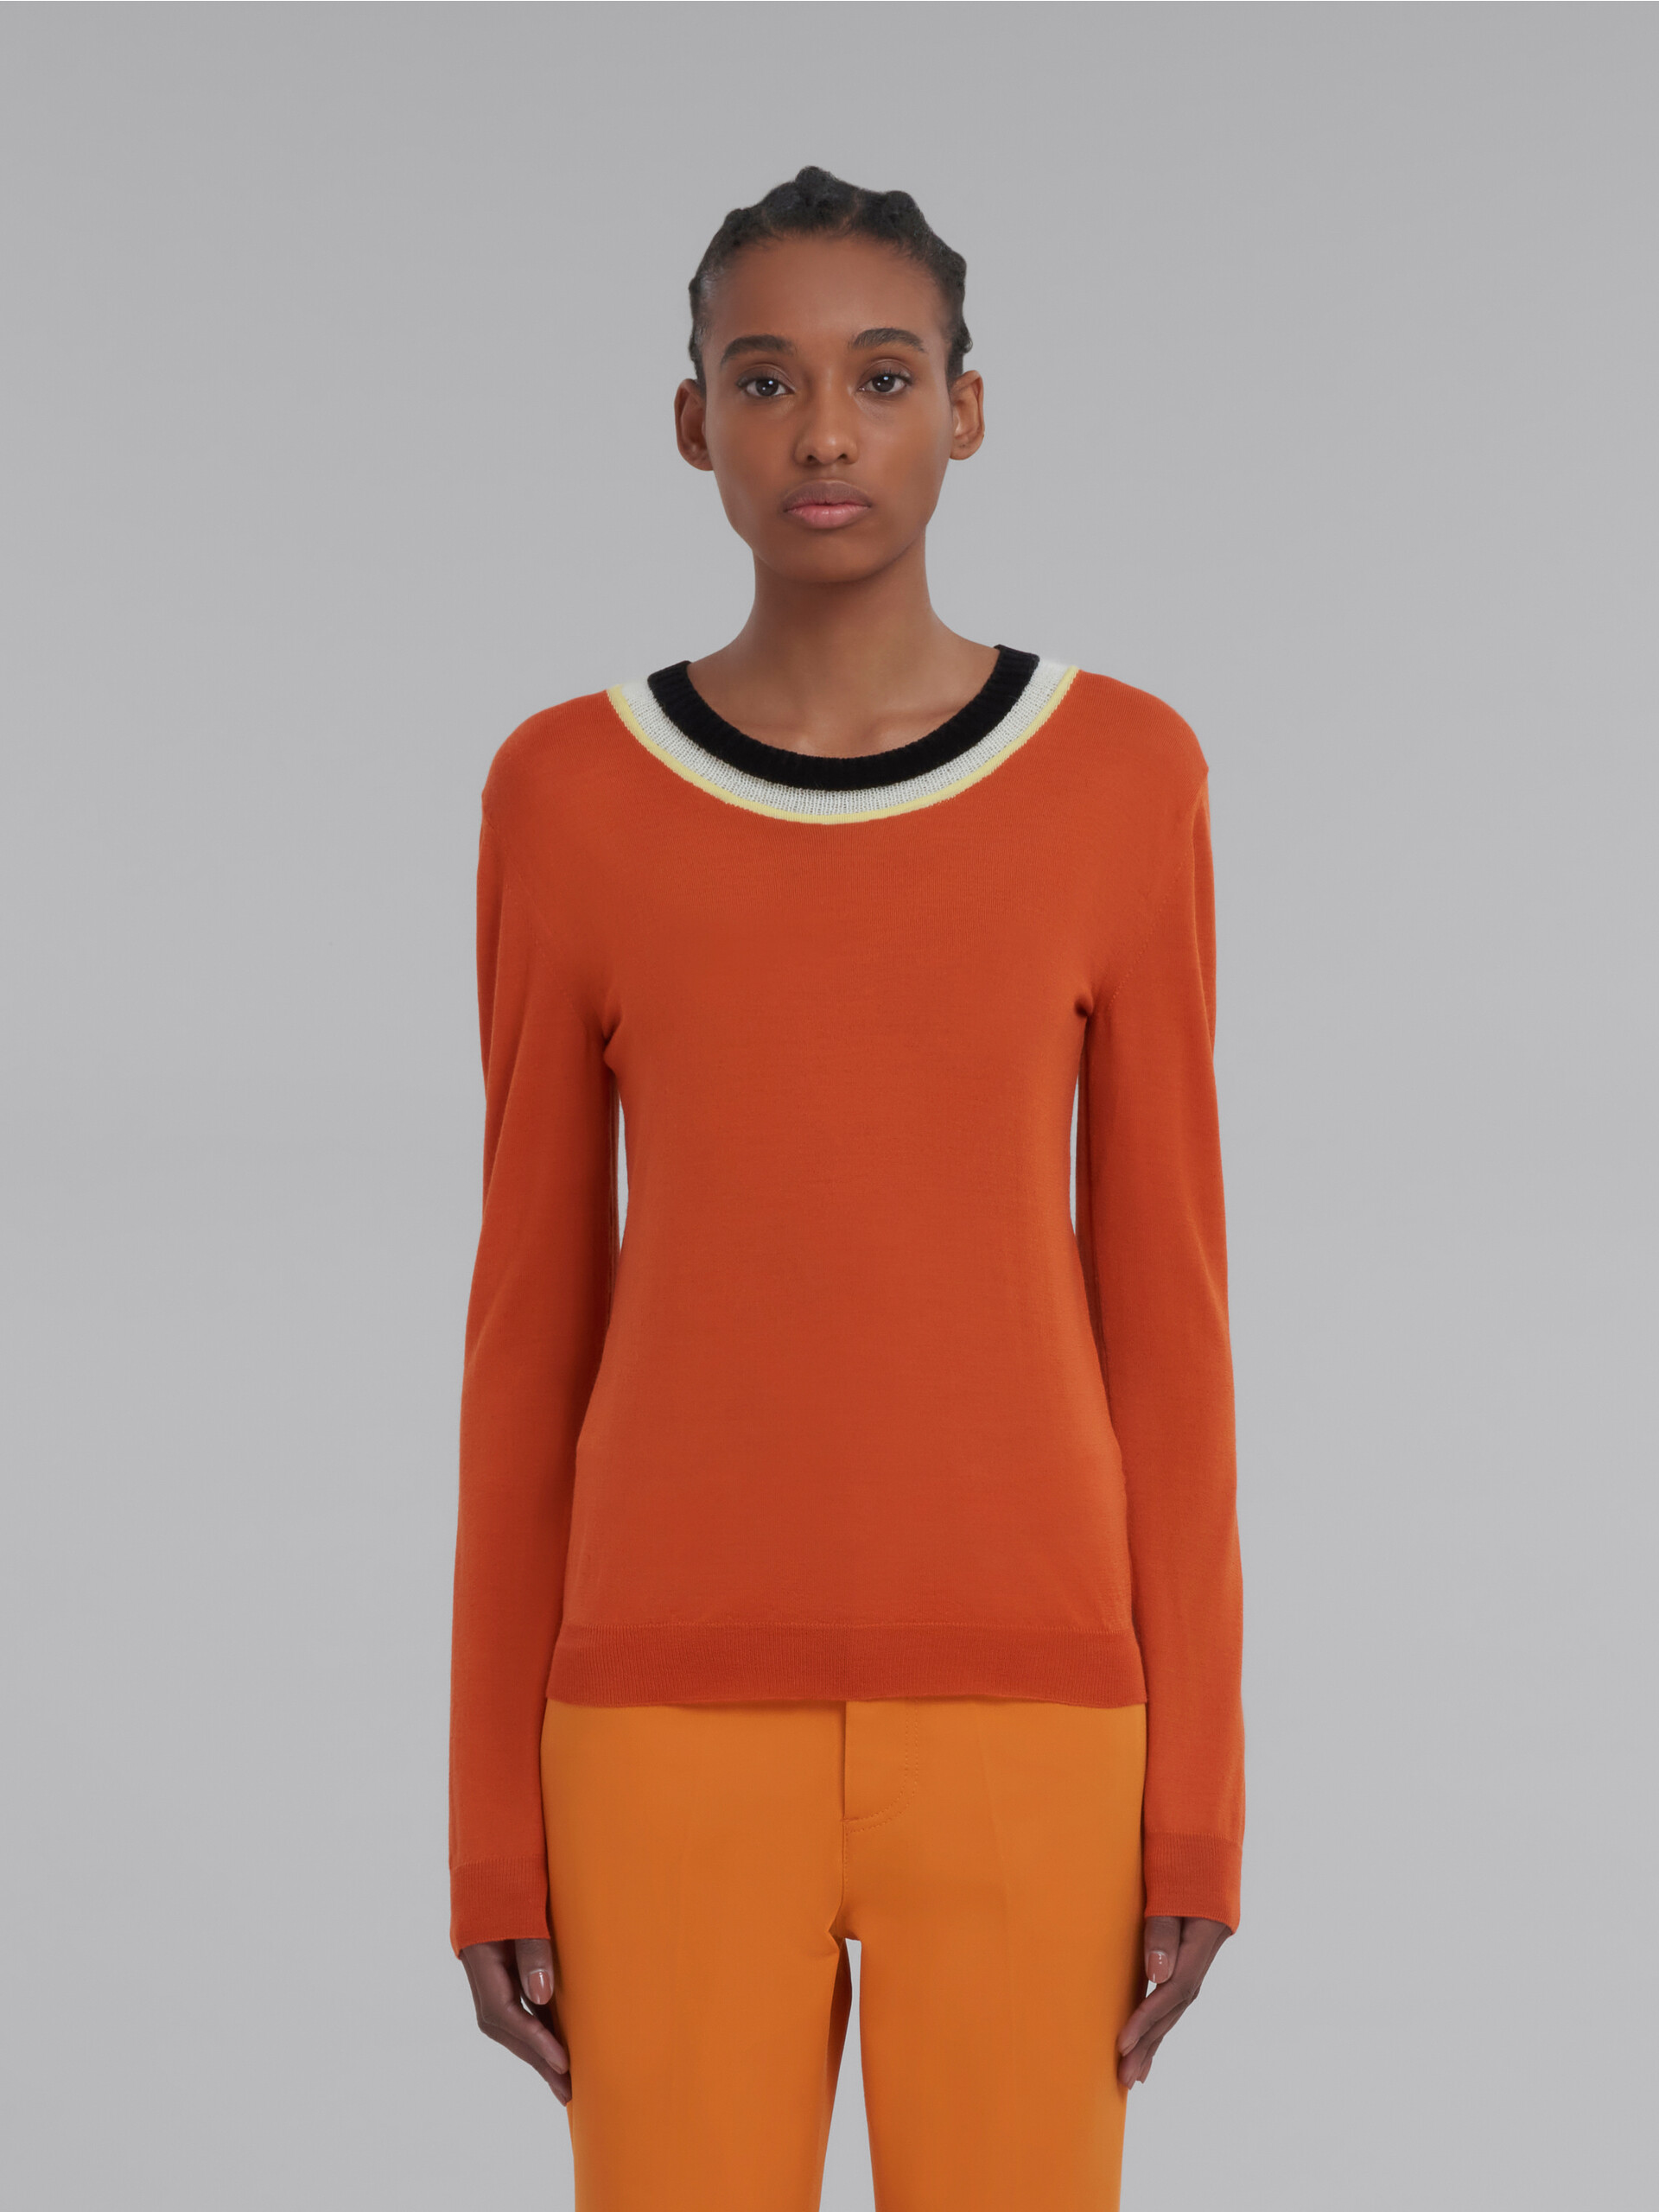 Orange wool jumper with triple neckline - Pullovers - Image 2